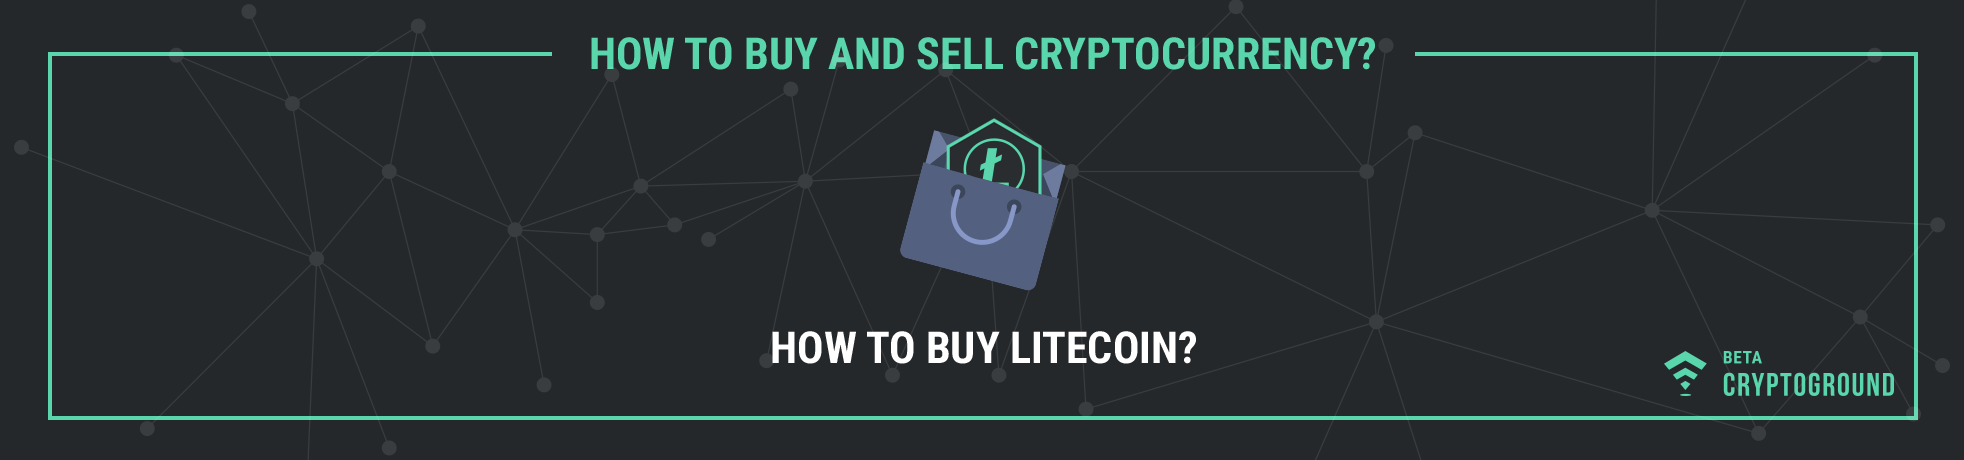 How to Buy Litecoin?